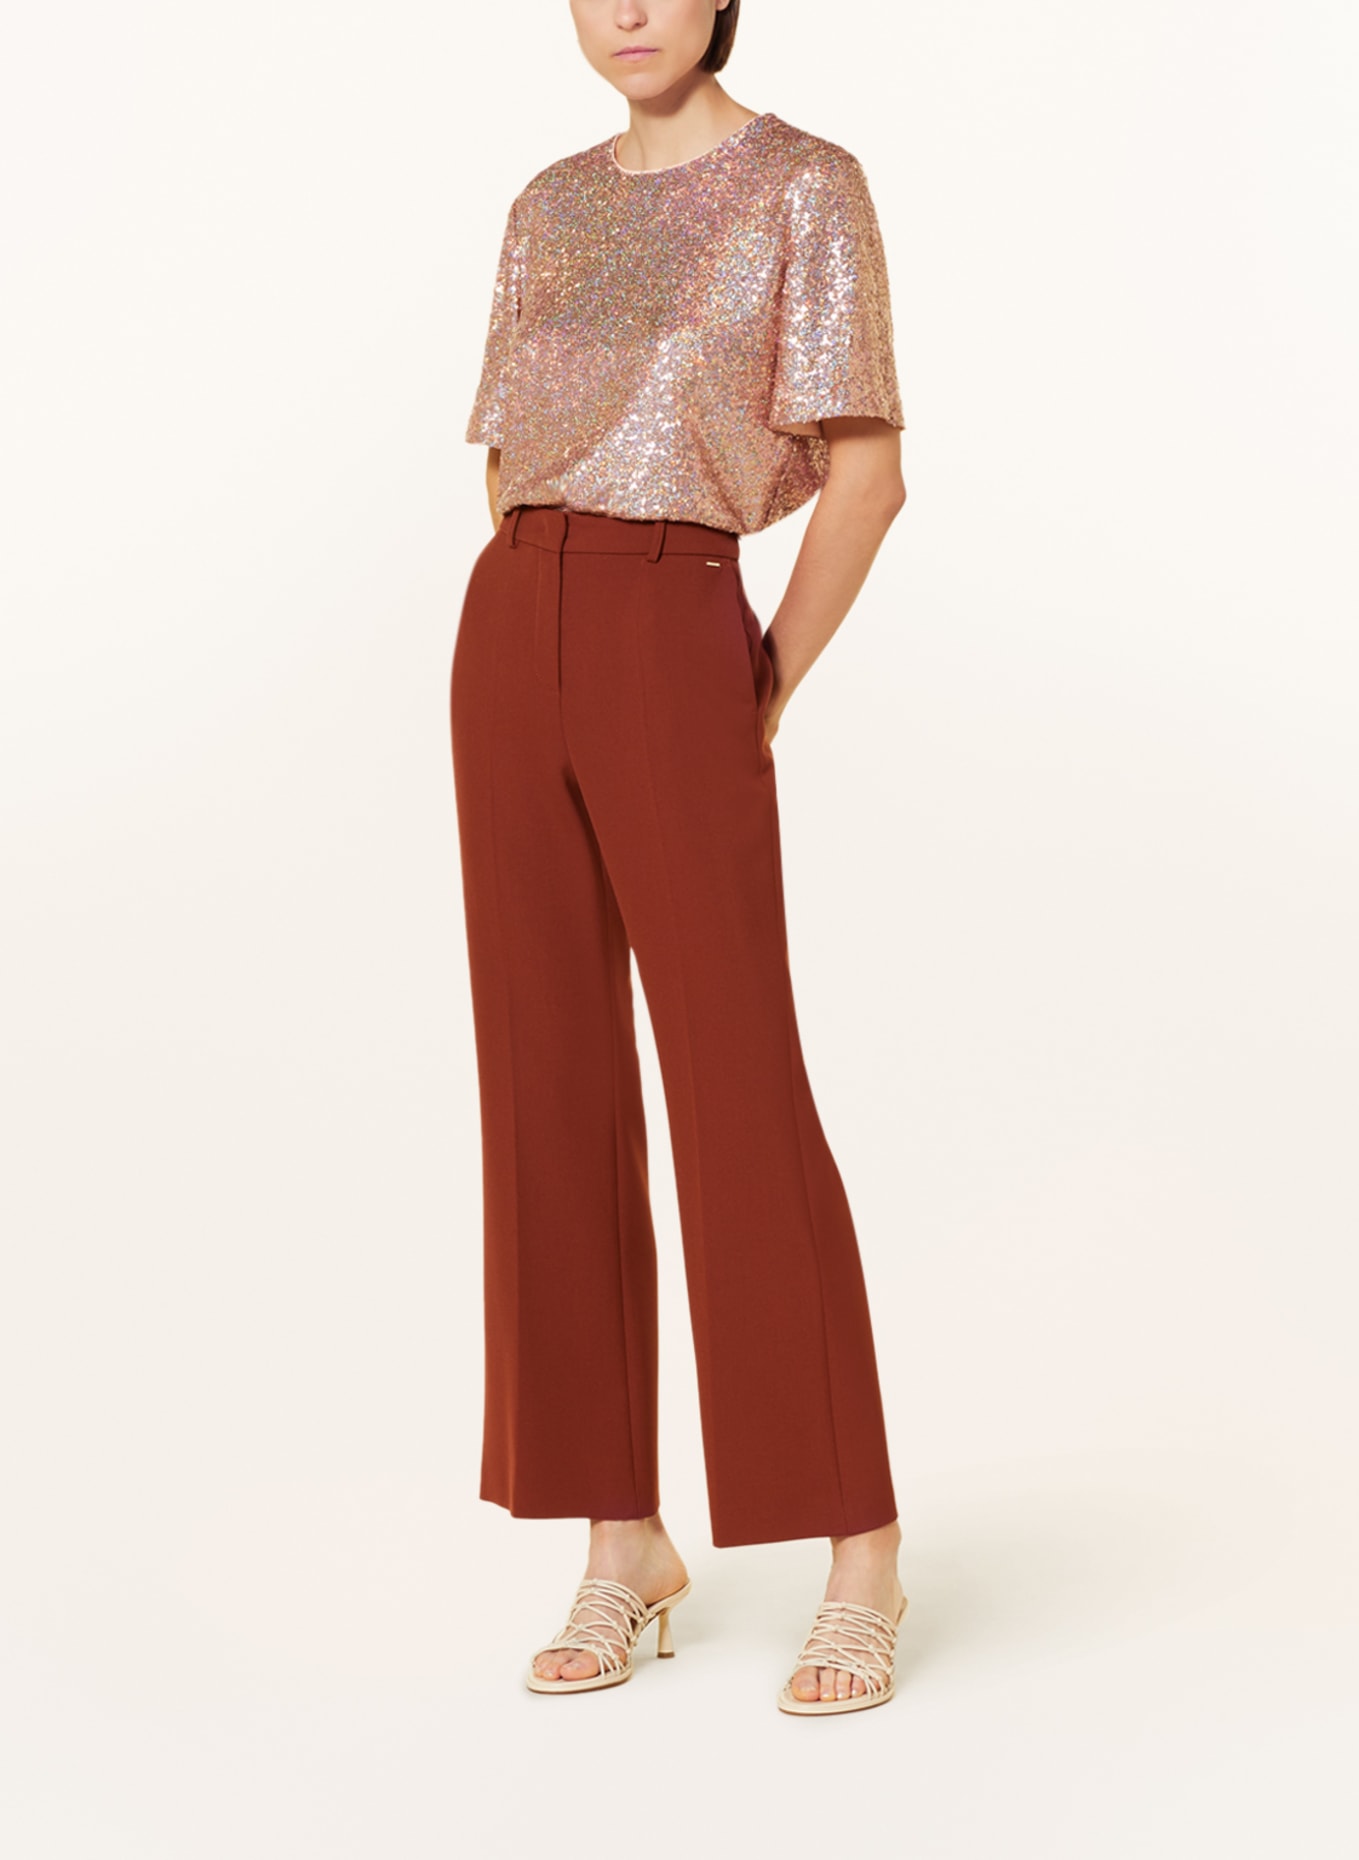 JOOP! Shirt blouse with sequins, Color: 998 Open Miscellaneous         998 (Image 2)